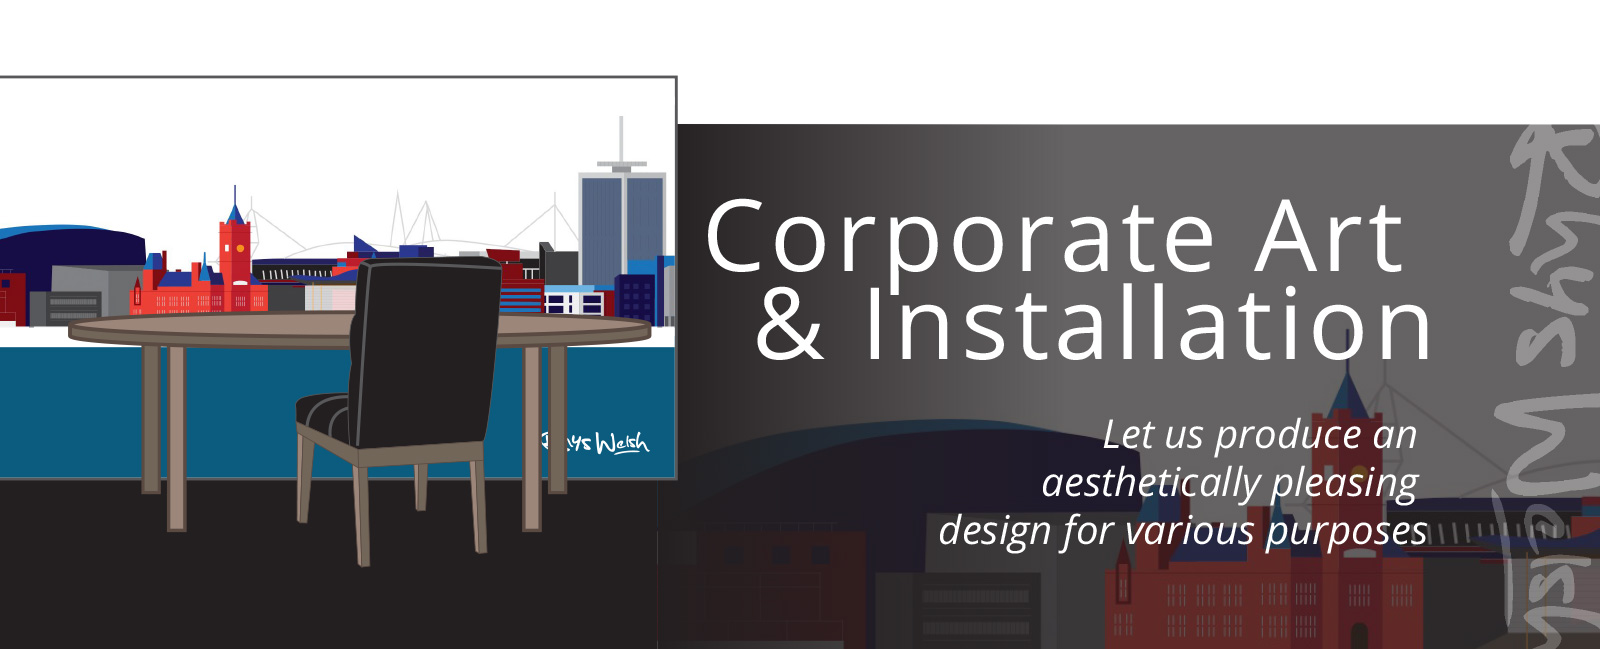 Corporate Art Installation Graphic cardiff slide